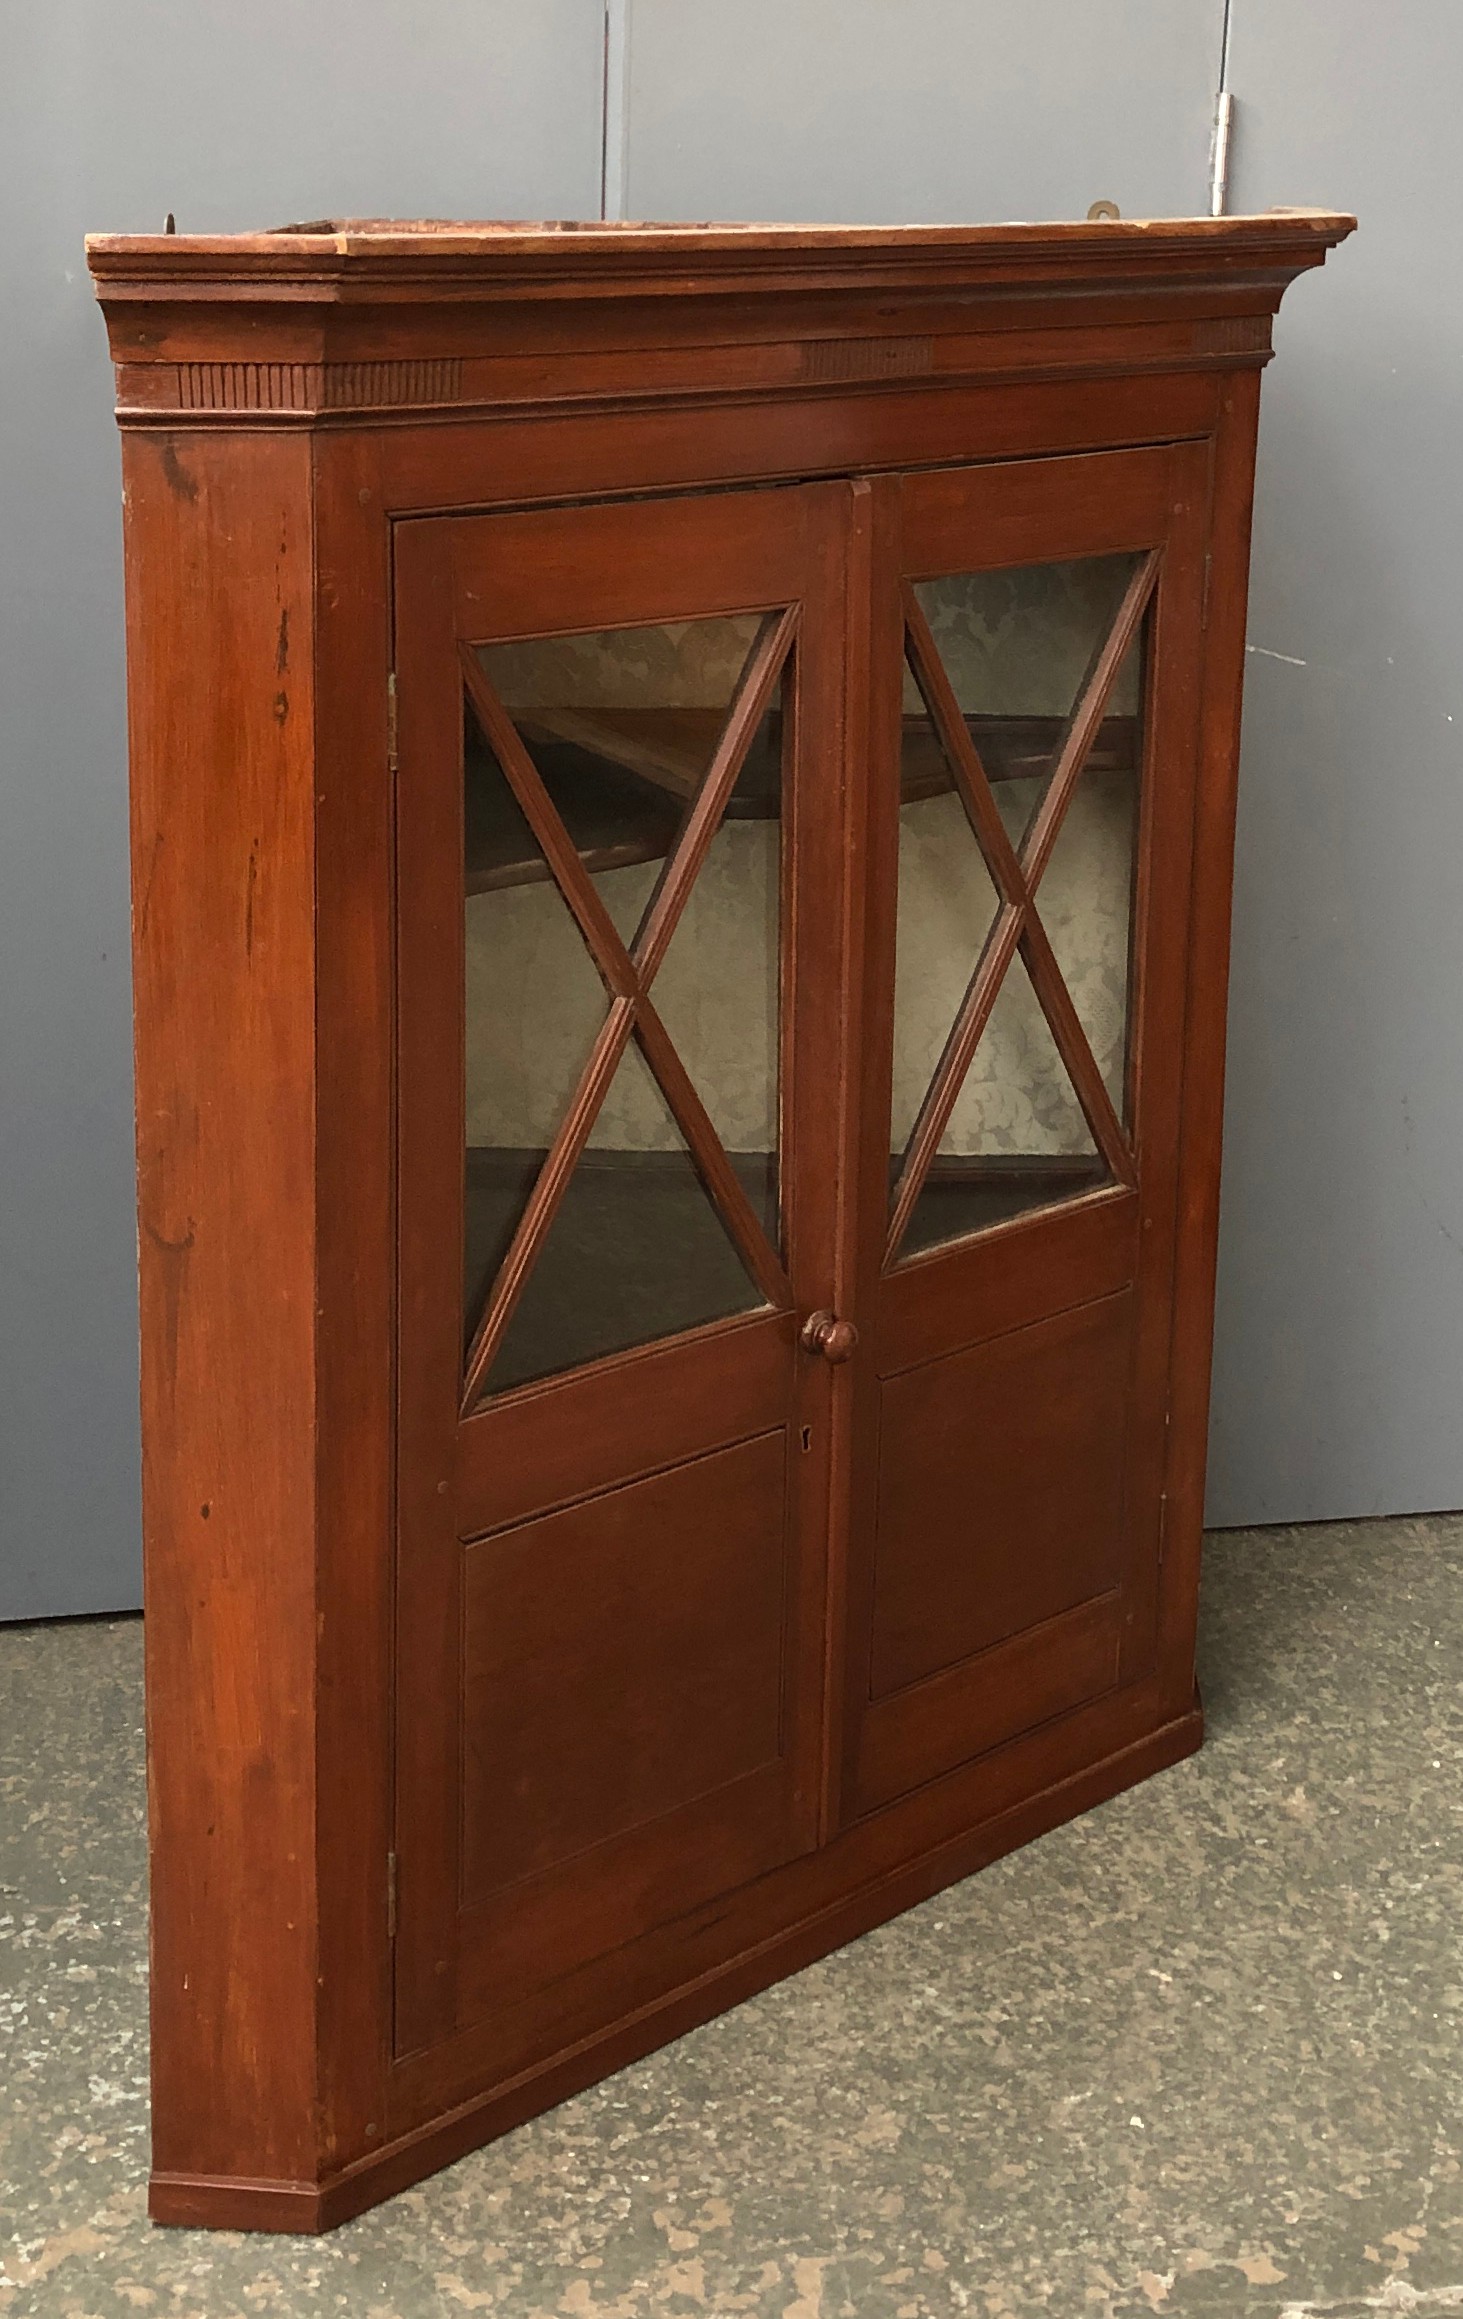 A glazed mahogany corner cupboard, 92cmW